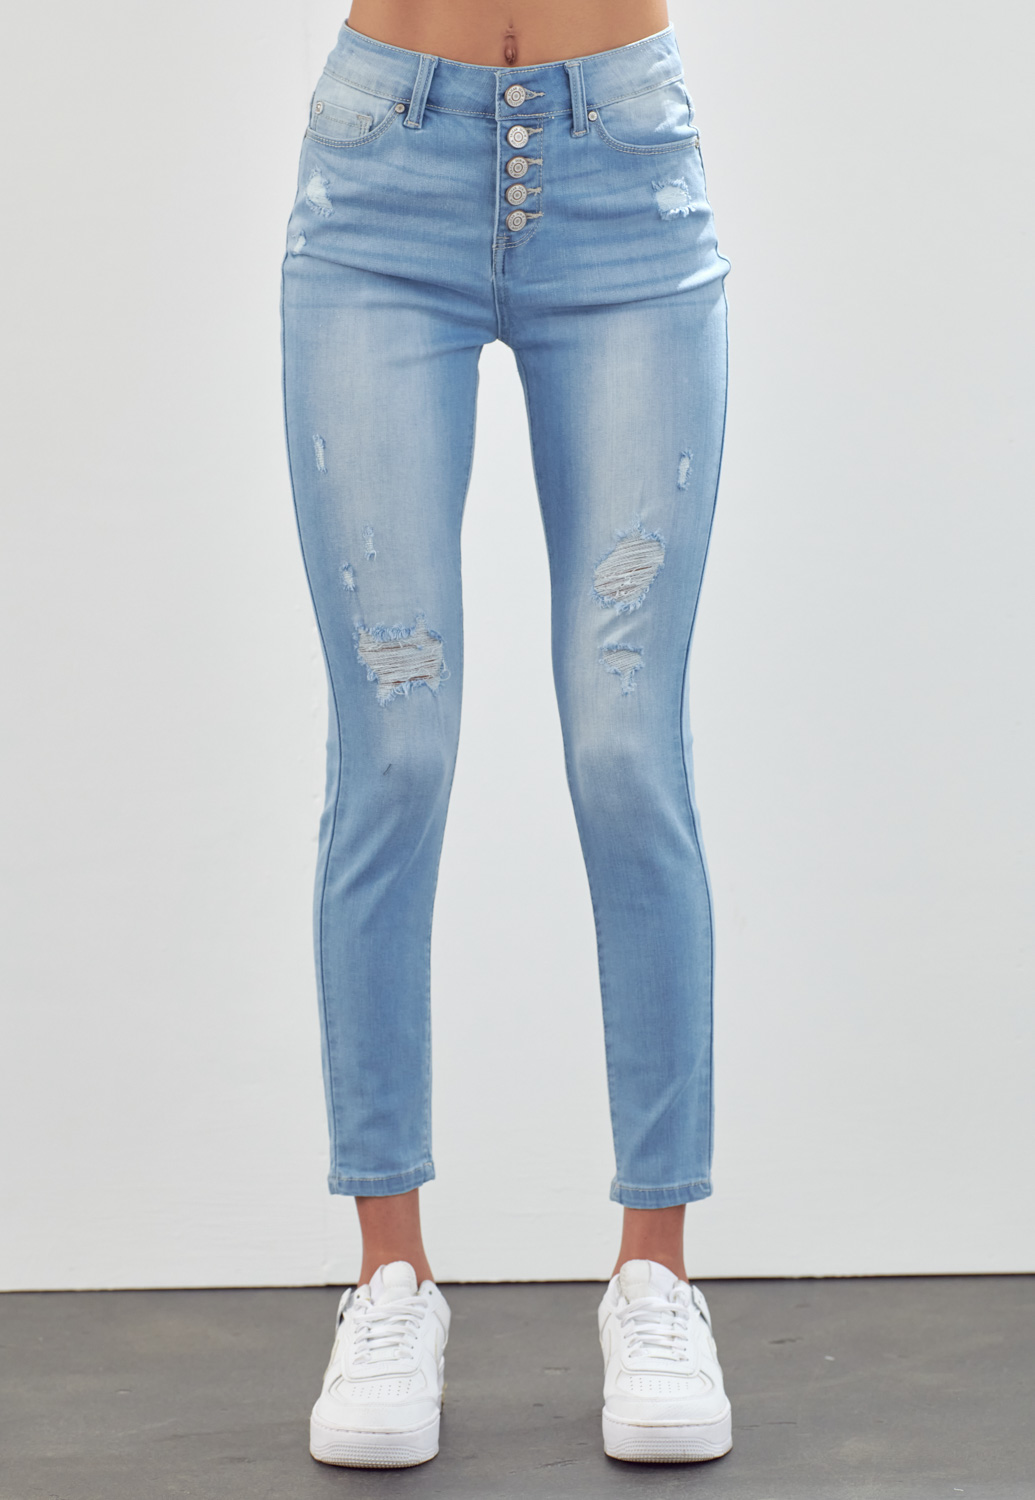 High Waist Buttoned Distressed Denim Jeans | Shop NEW ARRIVALS at ...